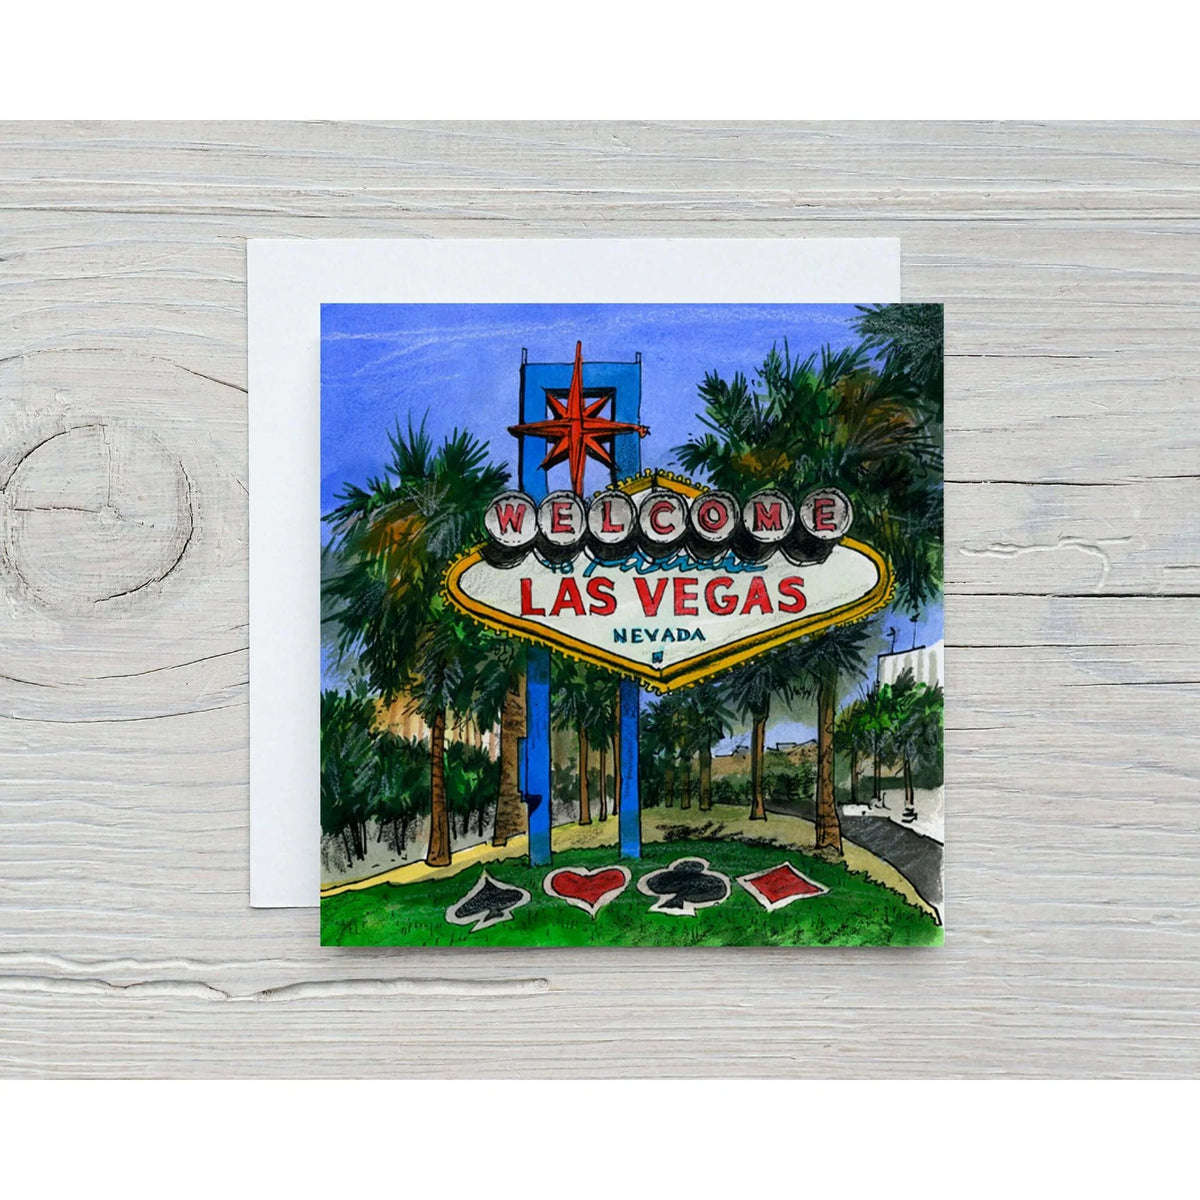 Las Vegas, Nevada, U.S.A Notecard | Totally Toronto Art Inc. 